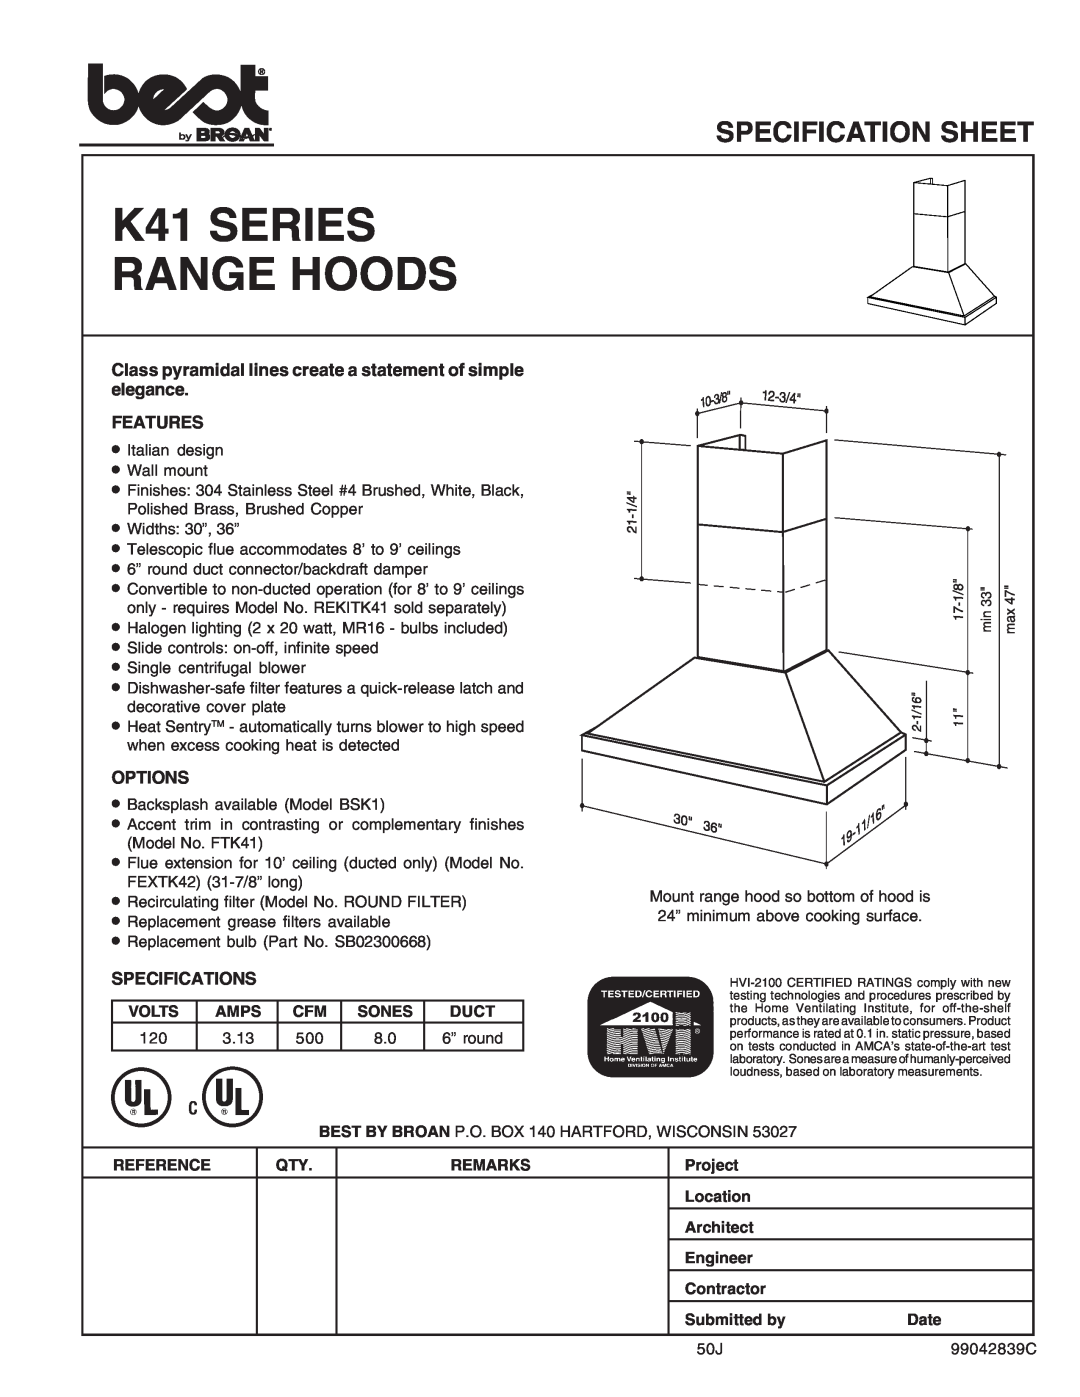 Best specifications K41 SERIES RANGE HOODS, Specification Sheet, Features, Options, Specifications 